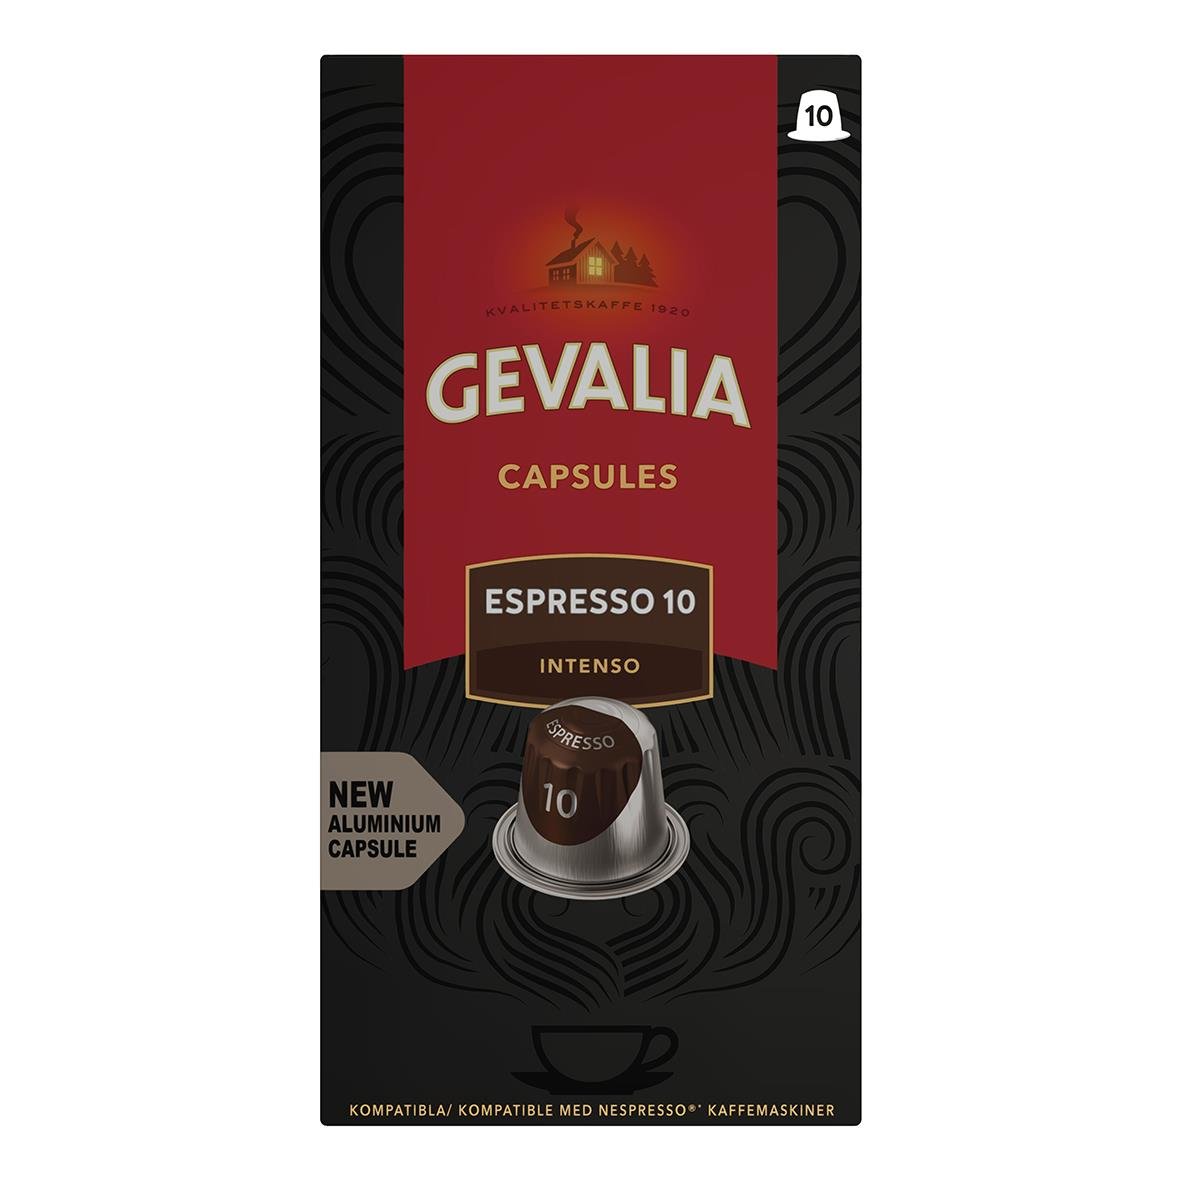 Kaffekapslar Gevalia Espresso 10 Intenso 60106158